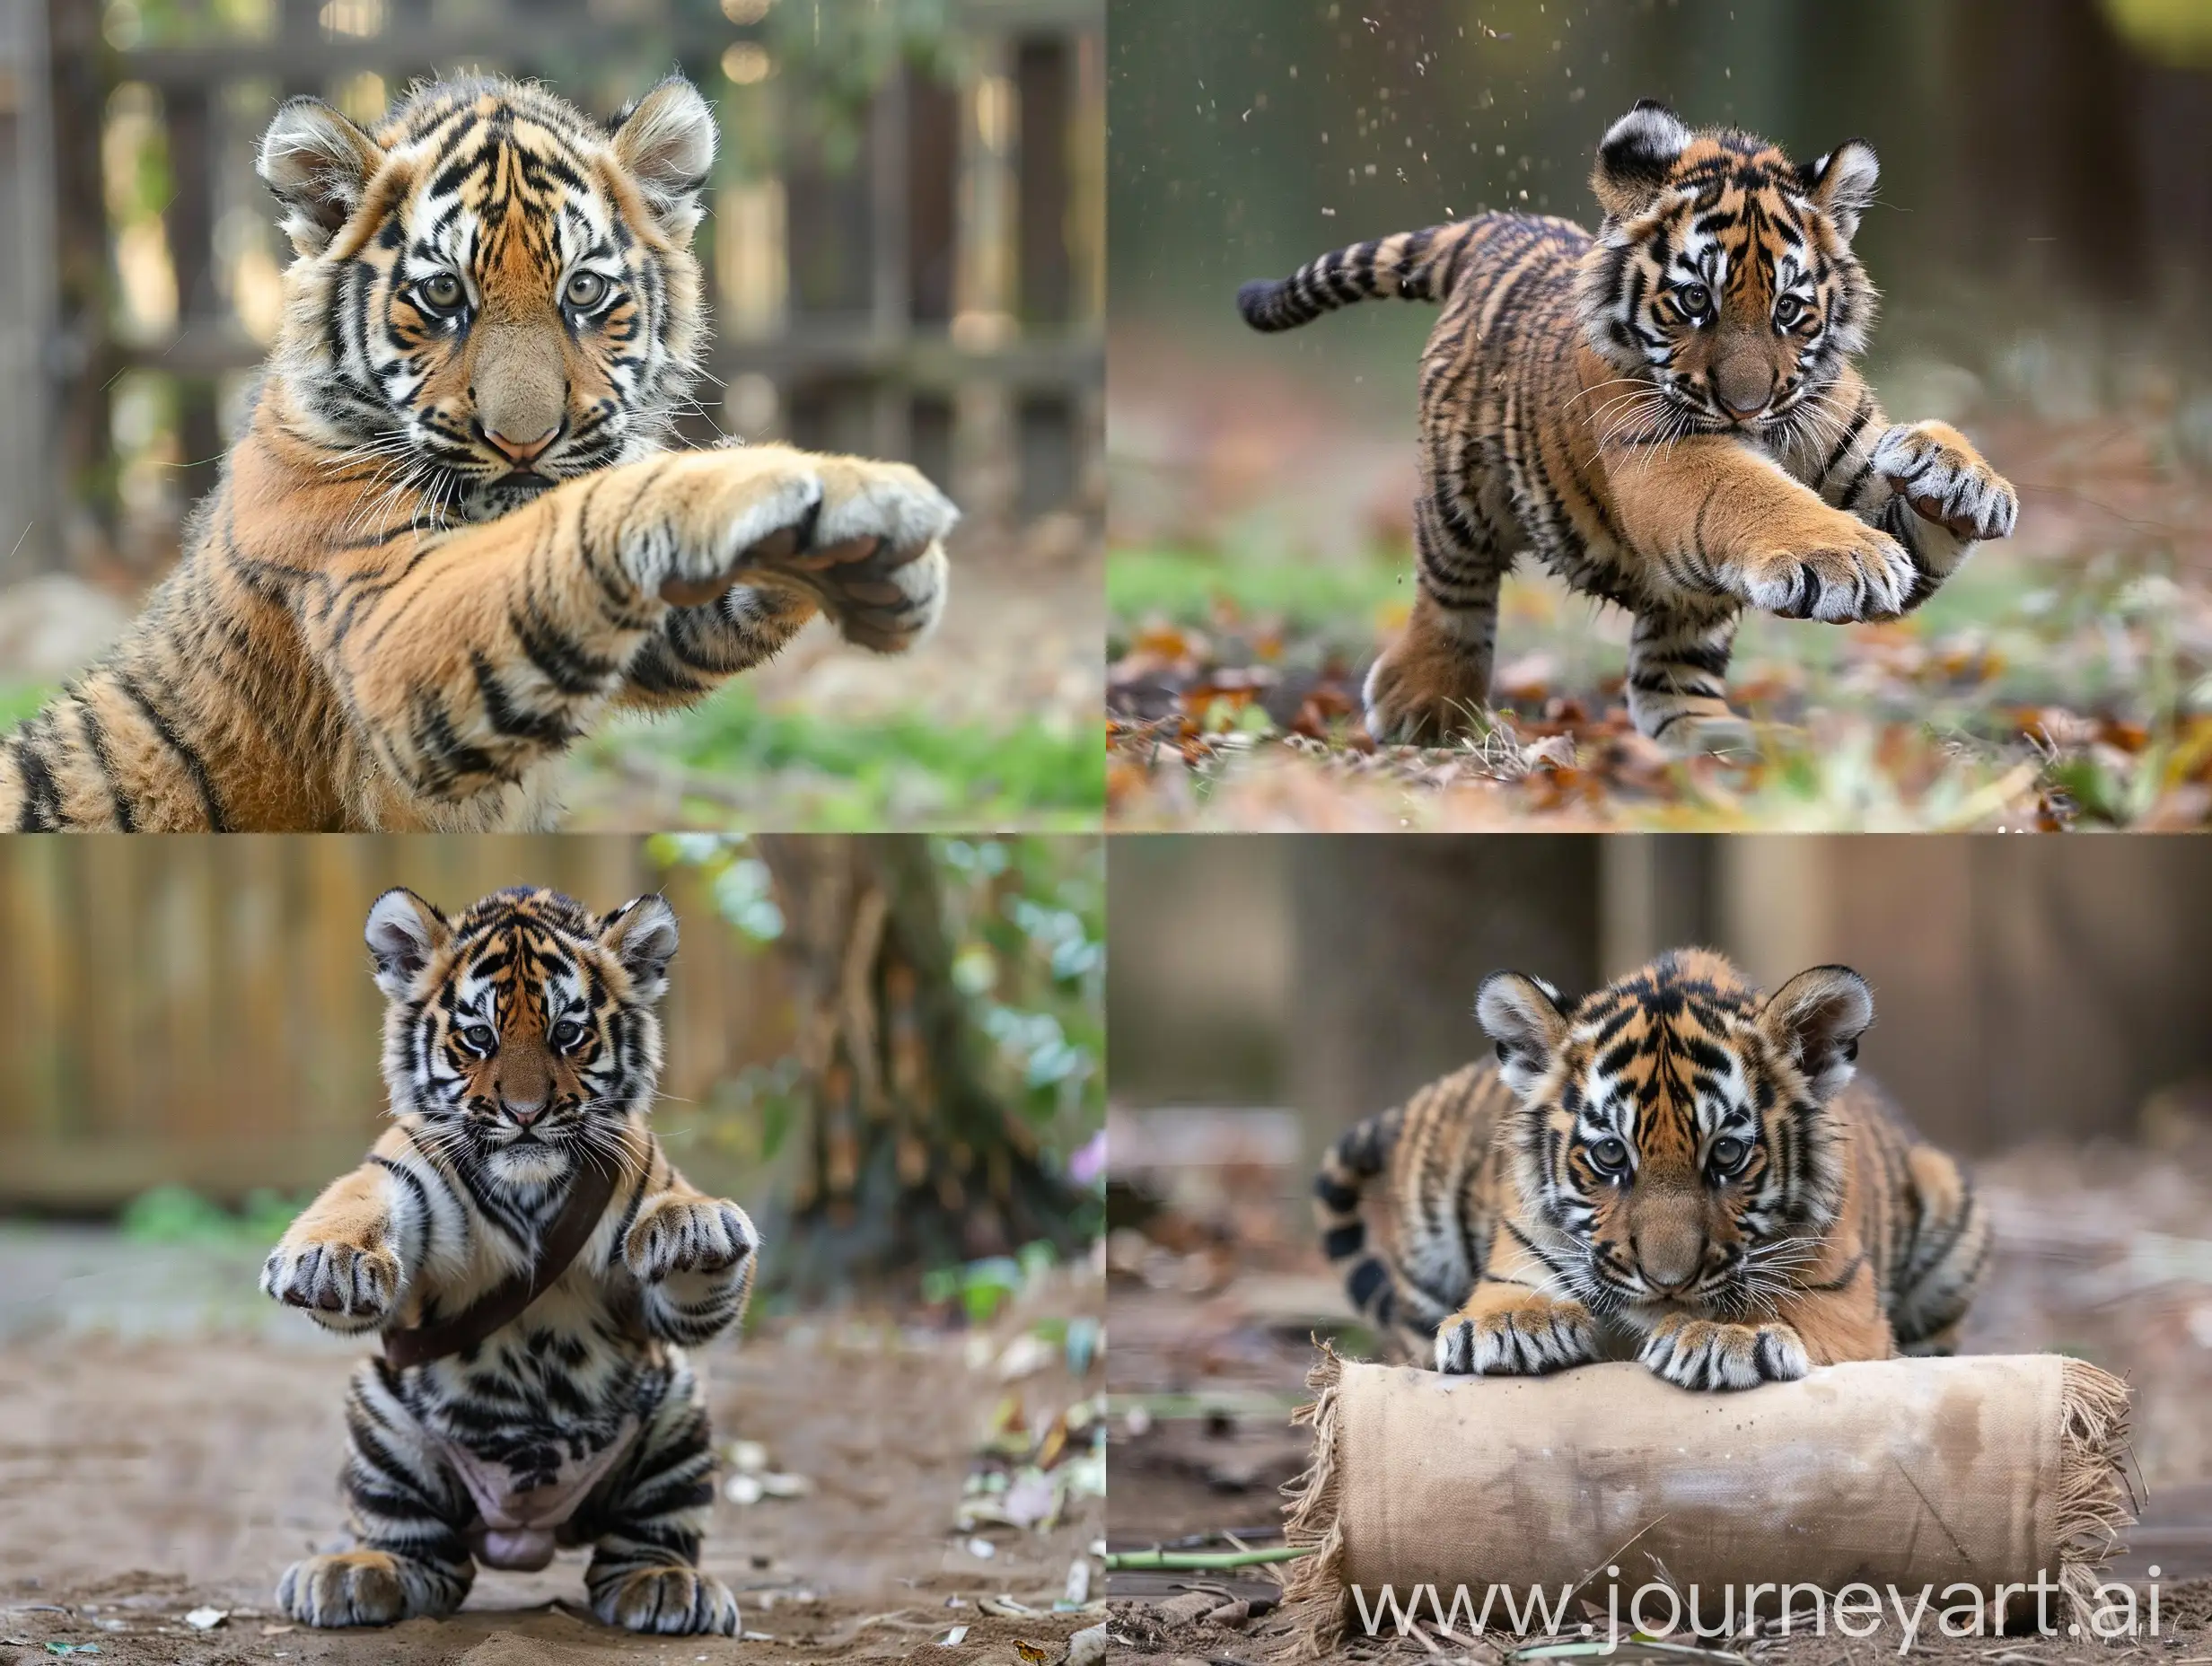 Playful-Tiger-Cub-Practicing-Sambo-Martial-Arts-in-a-43-Aspect-Ratio